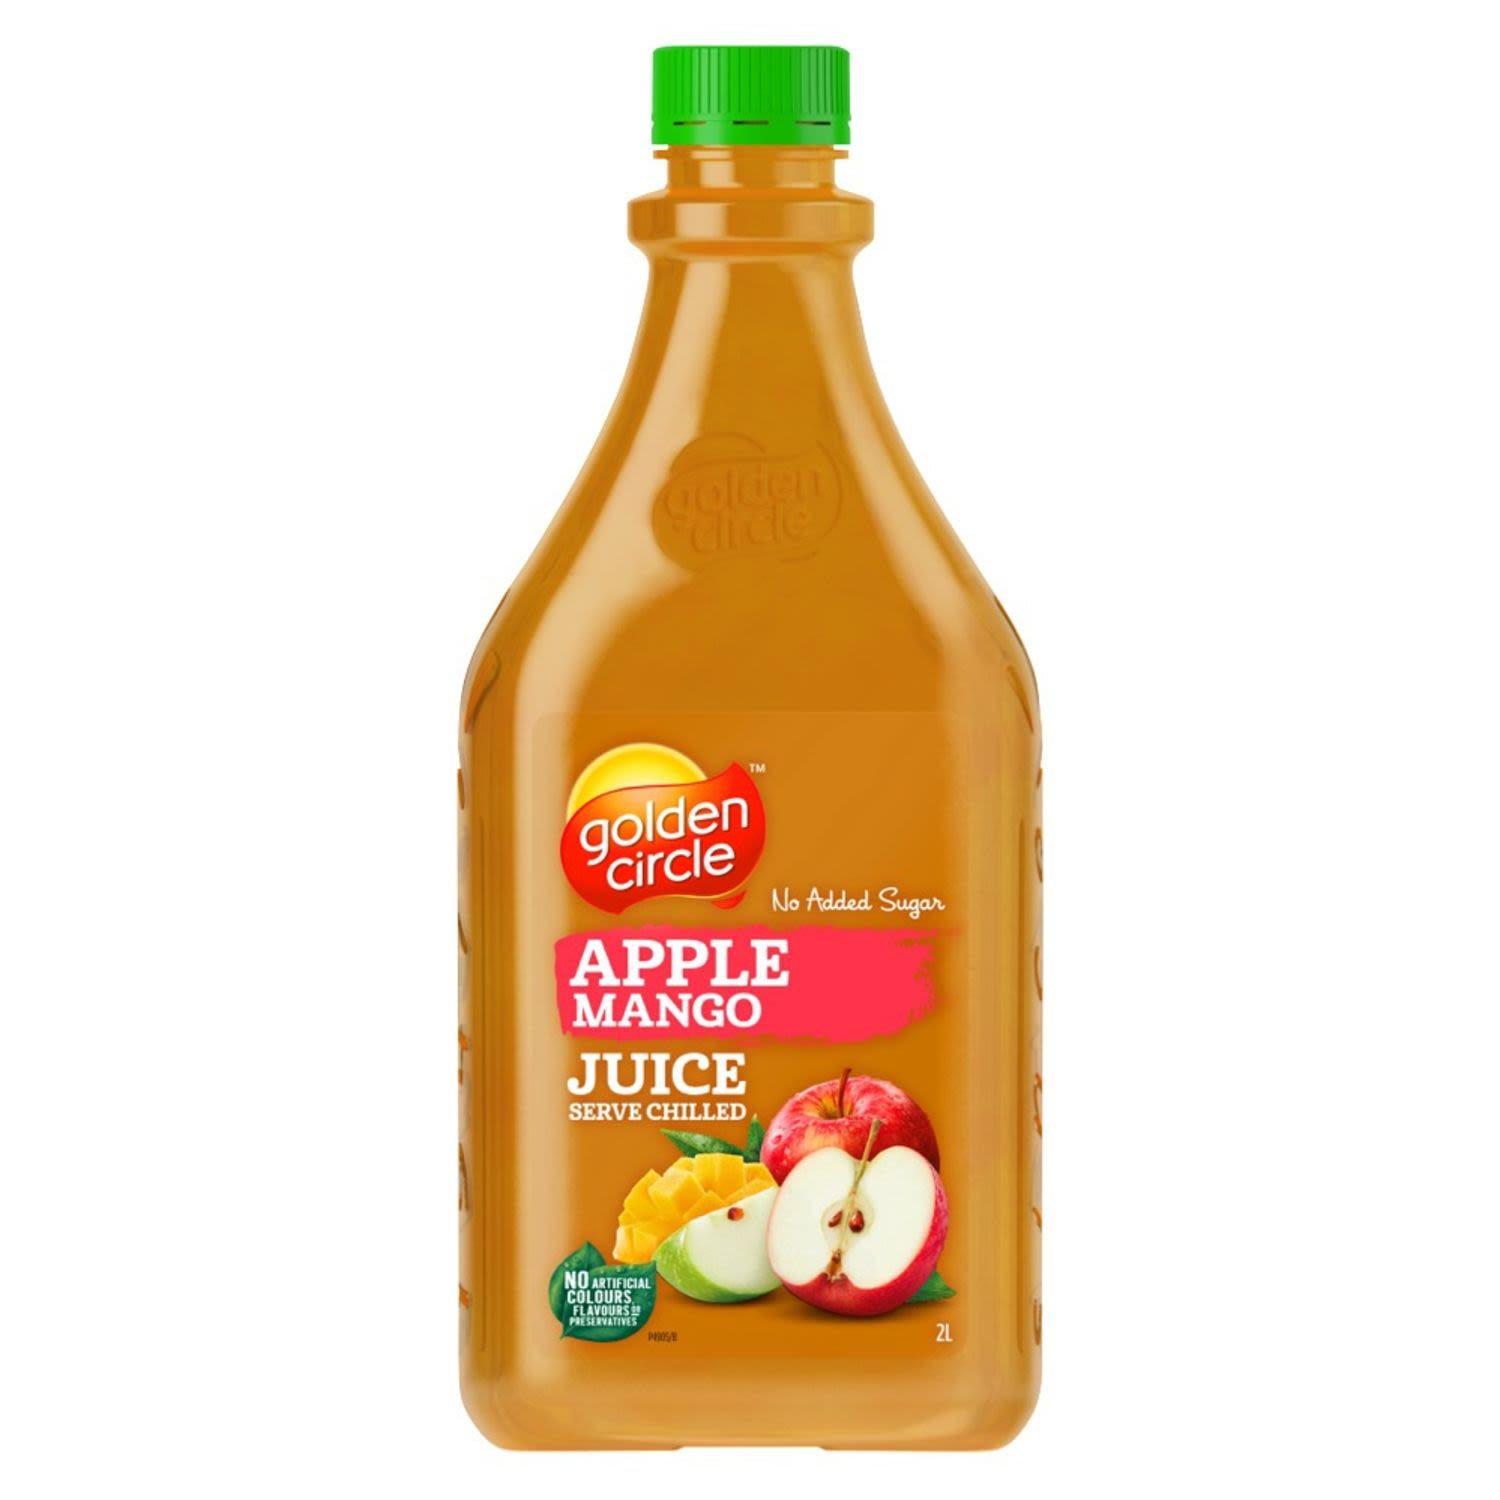 Golden Circle Apple Mango Juice, 2 Litre